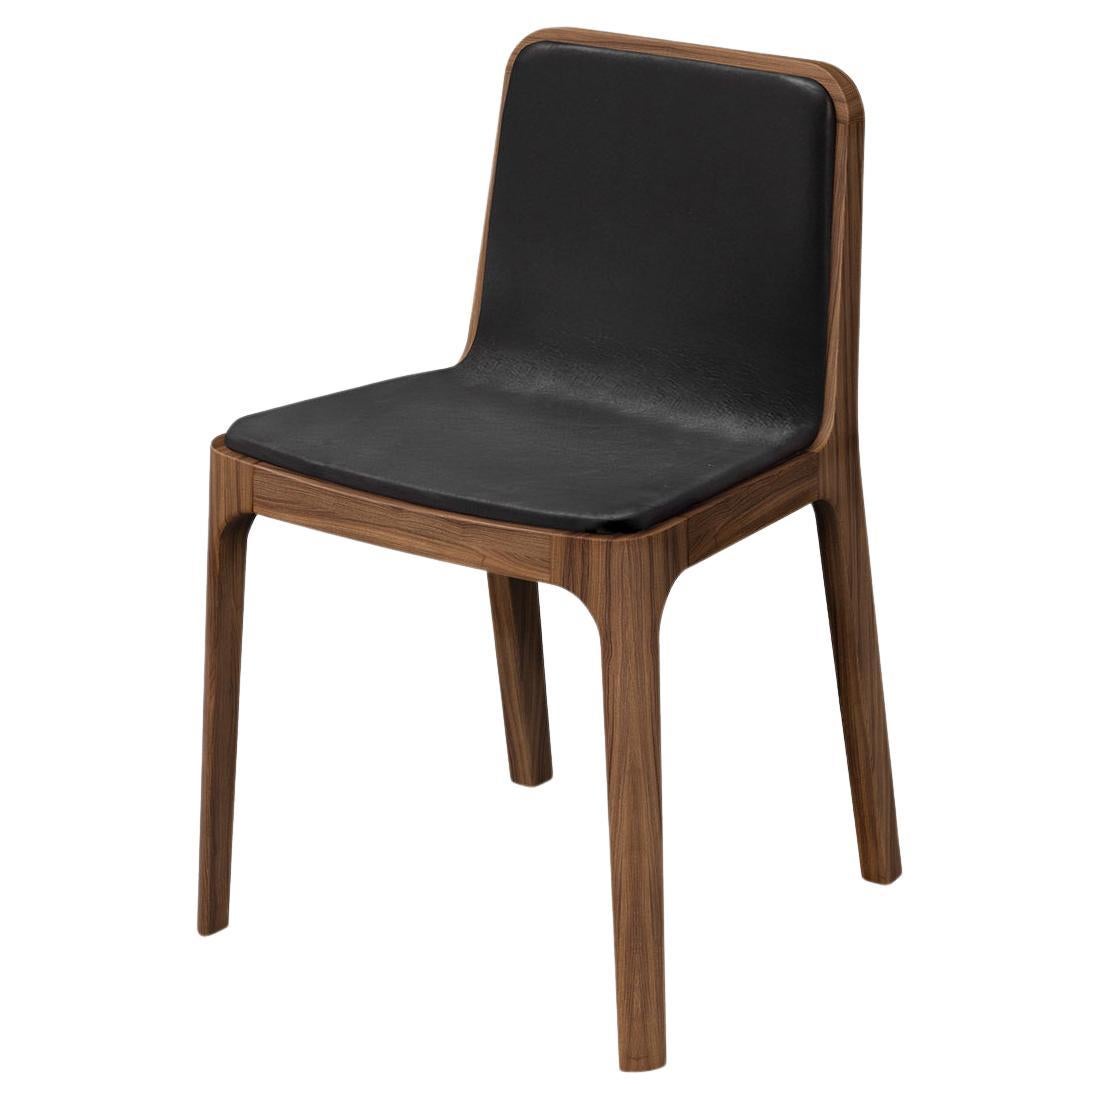 Minimalist Modern Chair in Walnut Wood Leather Upholstery